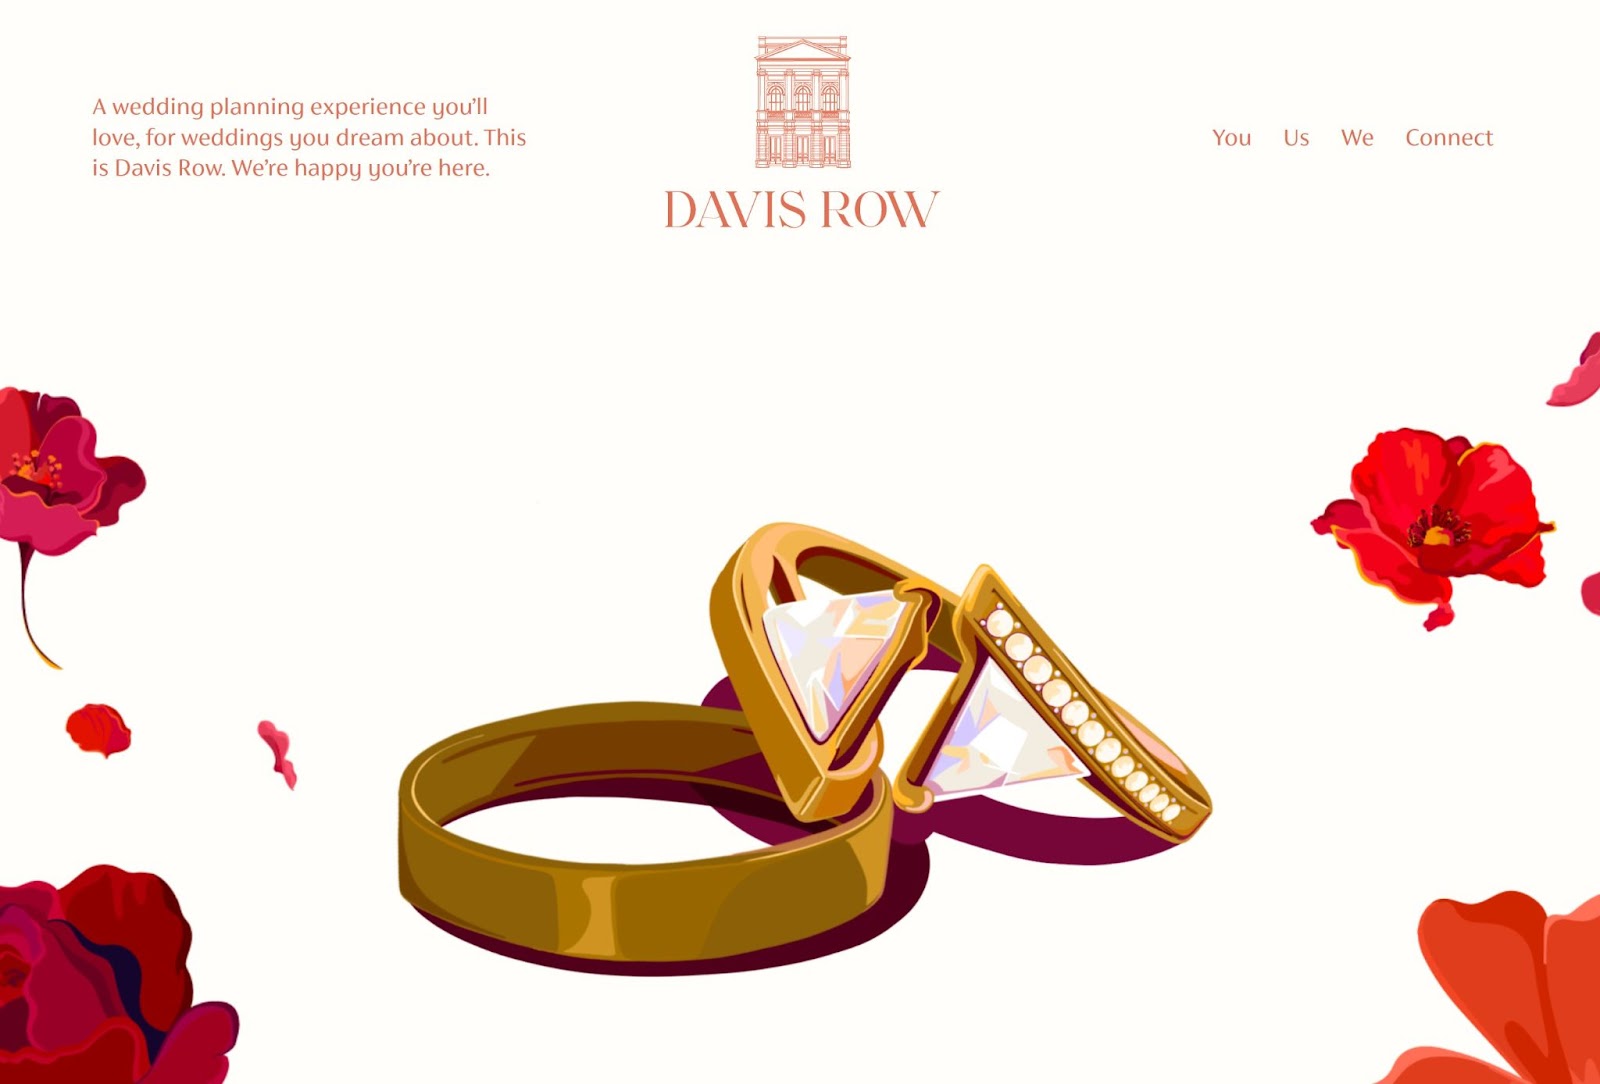 Davis Row wedding planner's website You page.